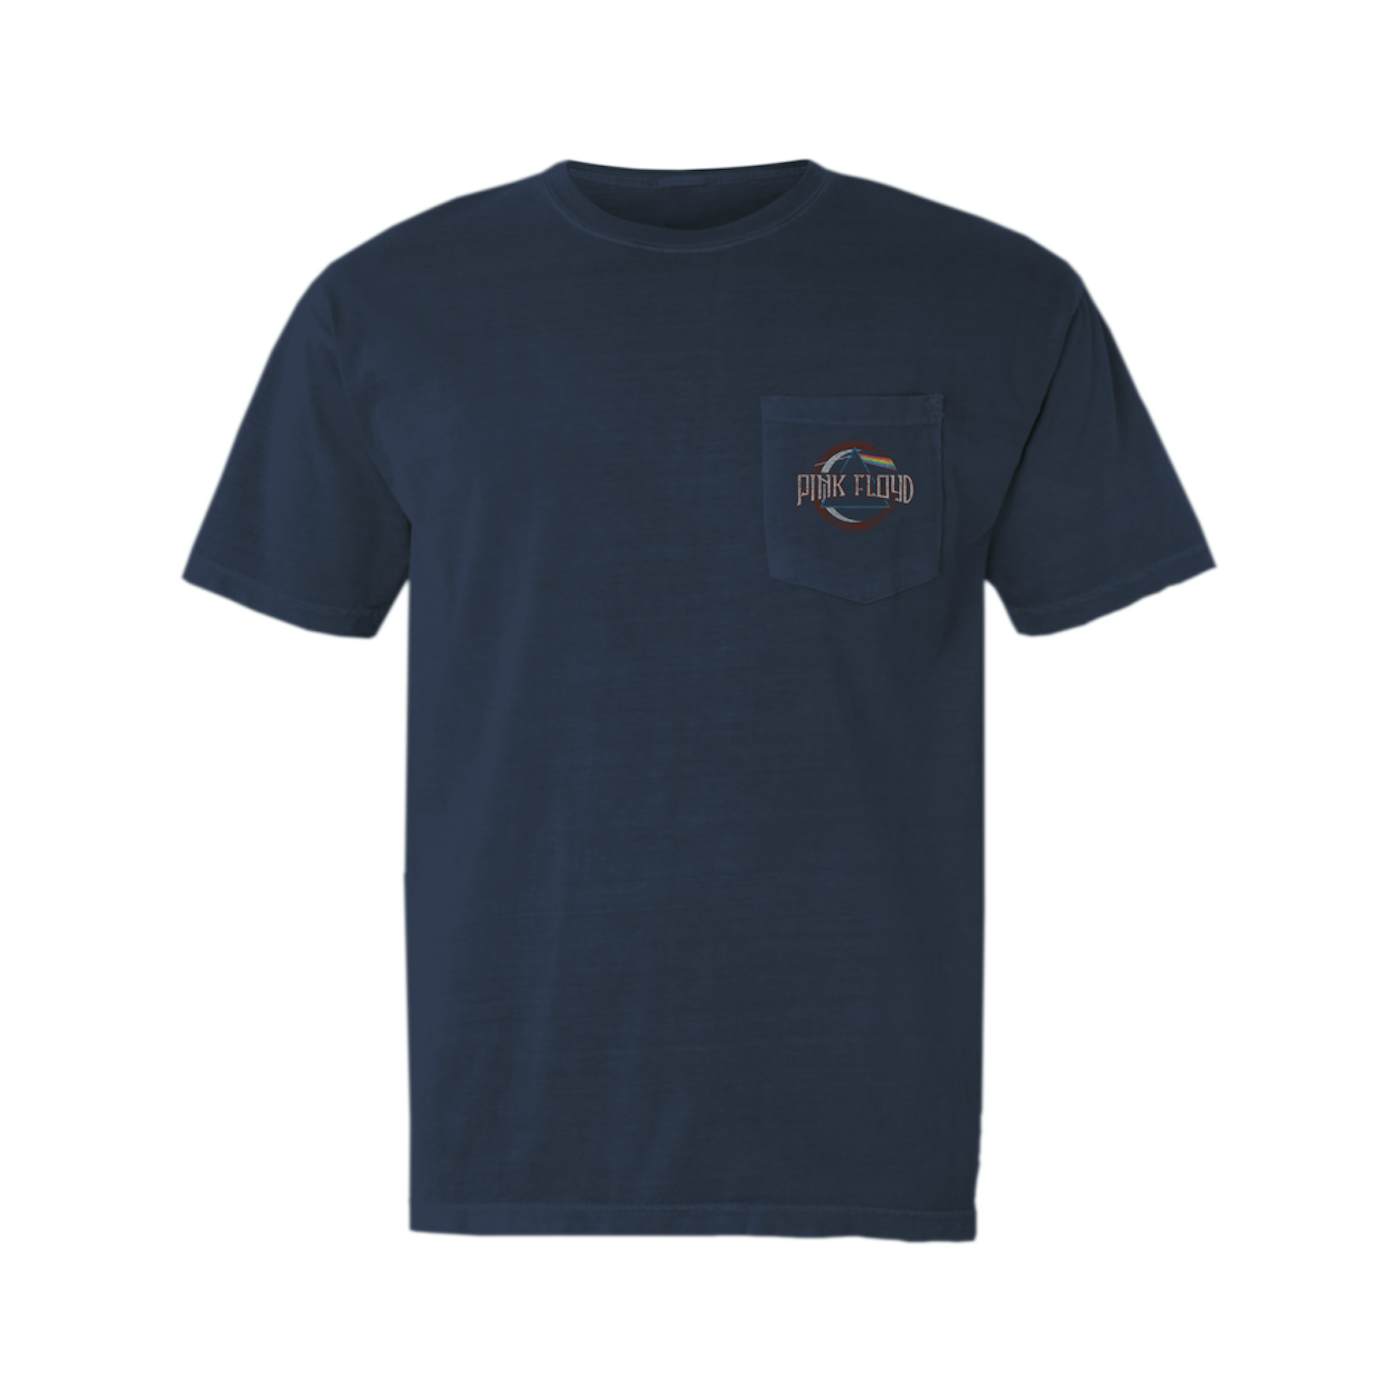 Pink Floyd T-Shirt | Dark Side Of The Moon Design Distressed (Merchbar Exclusive) Pink Floyd Pocket T-shirt